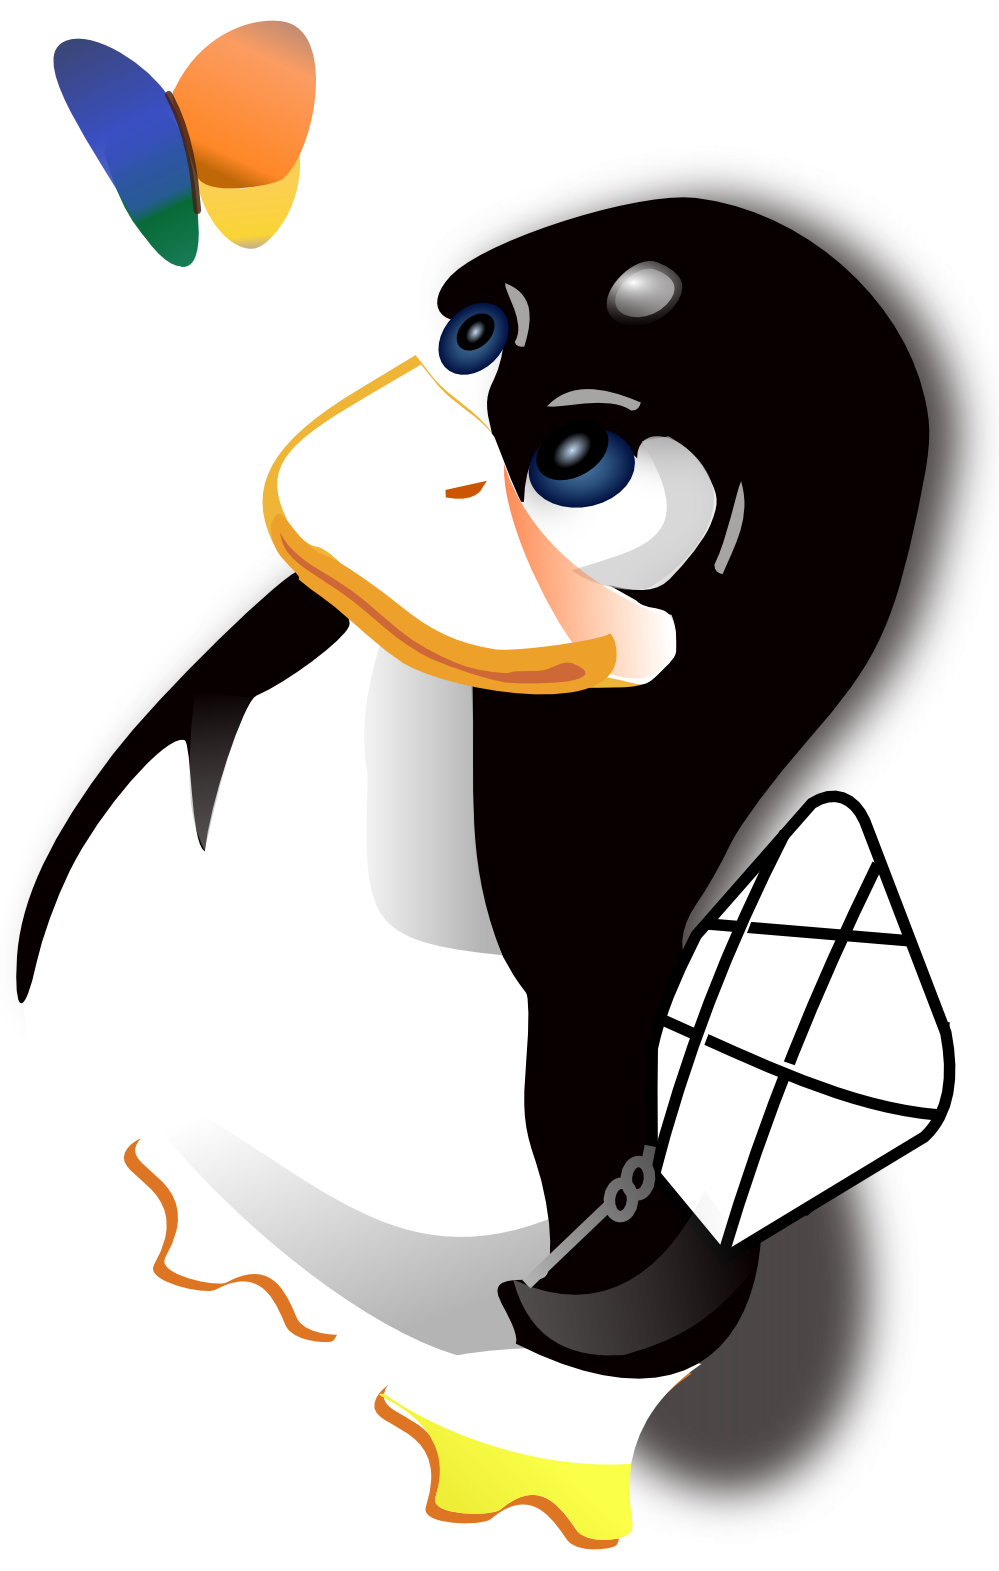 Download Tux Icons Linux Computer Ubuntu Logo HQ PNG Image | FreePNGImg